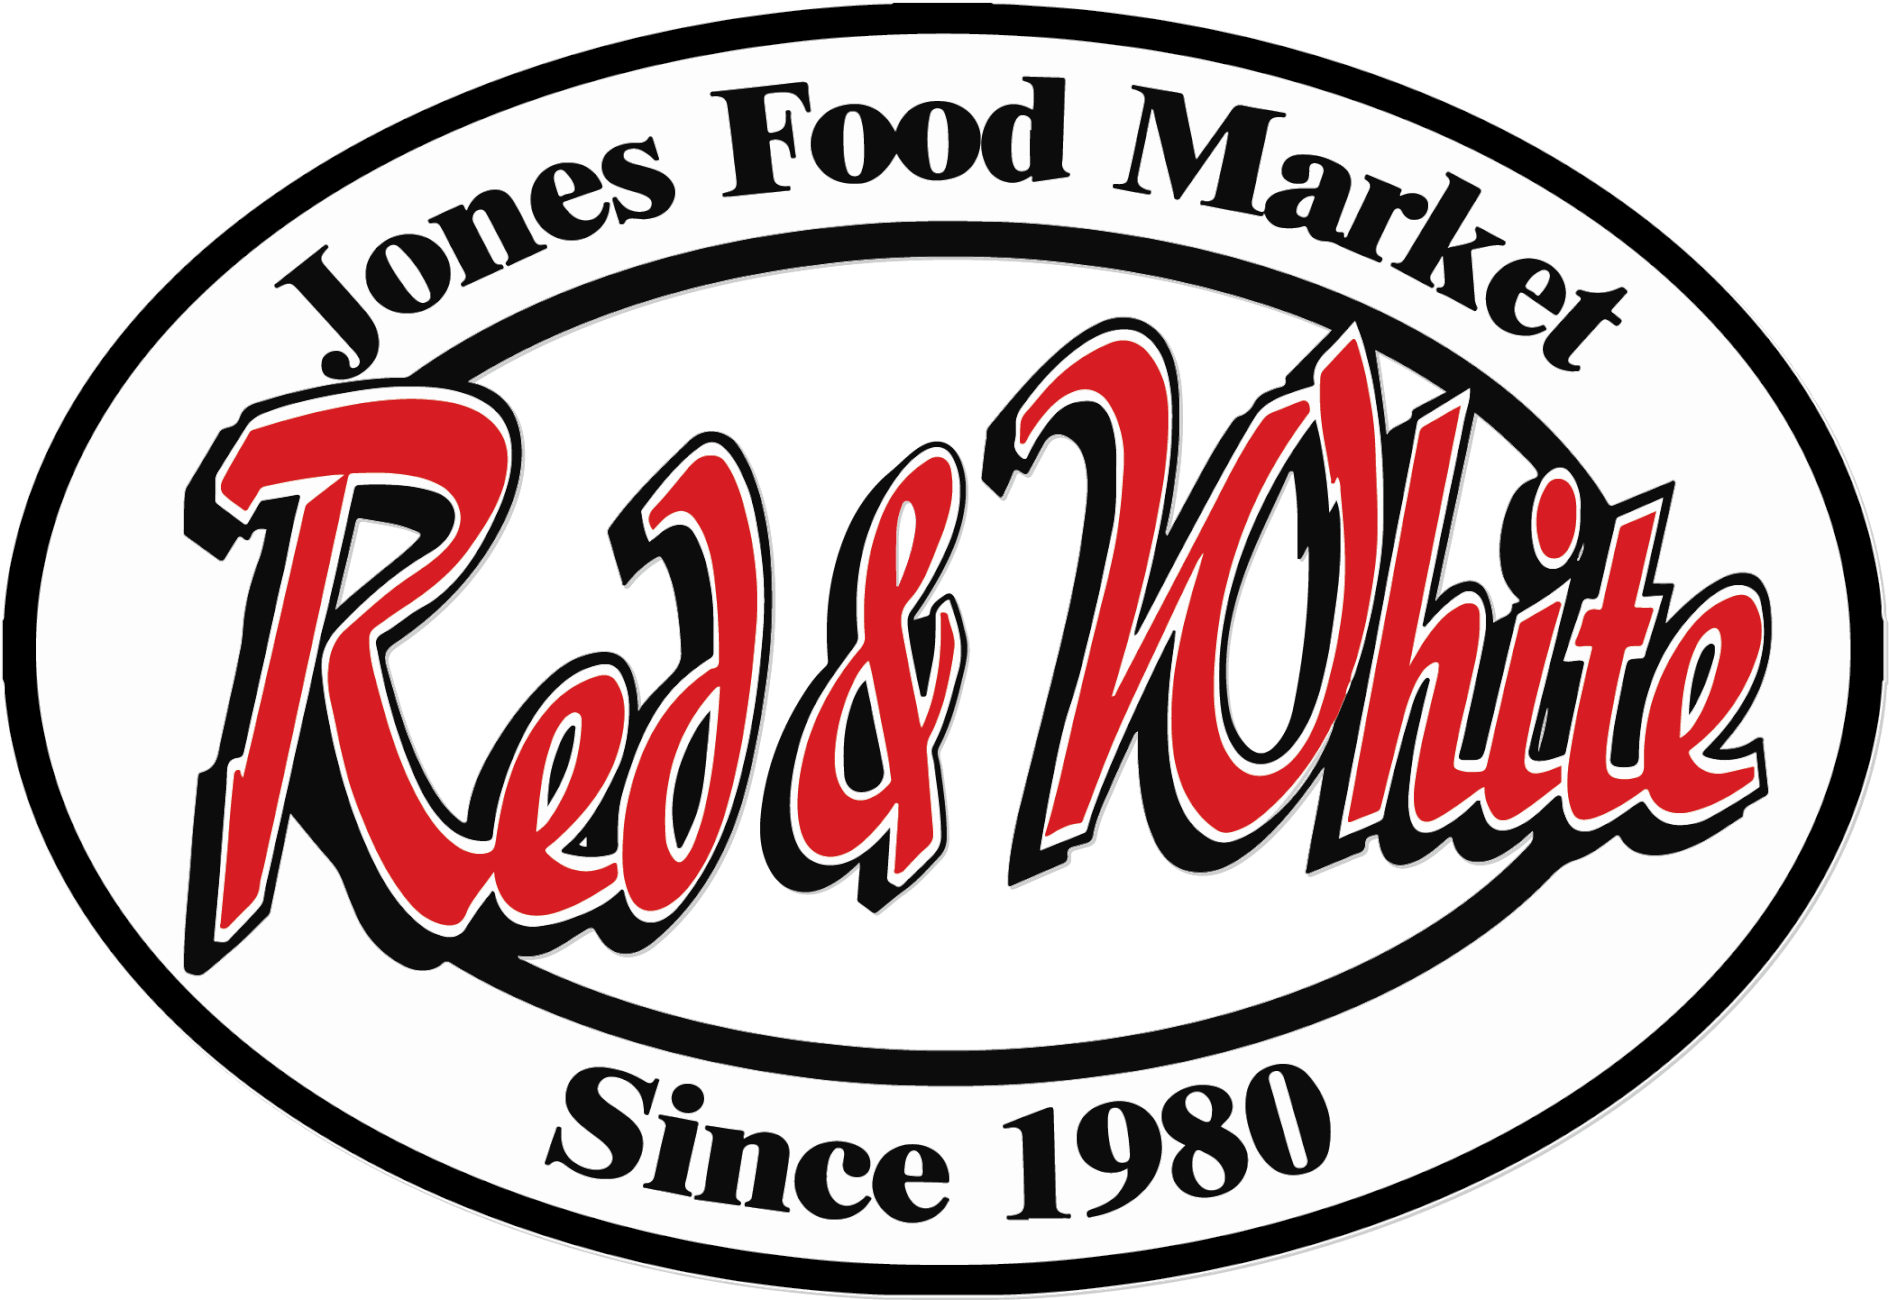 A theme logo of Jones Food Market Red & White